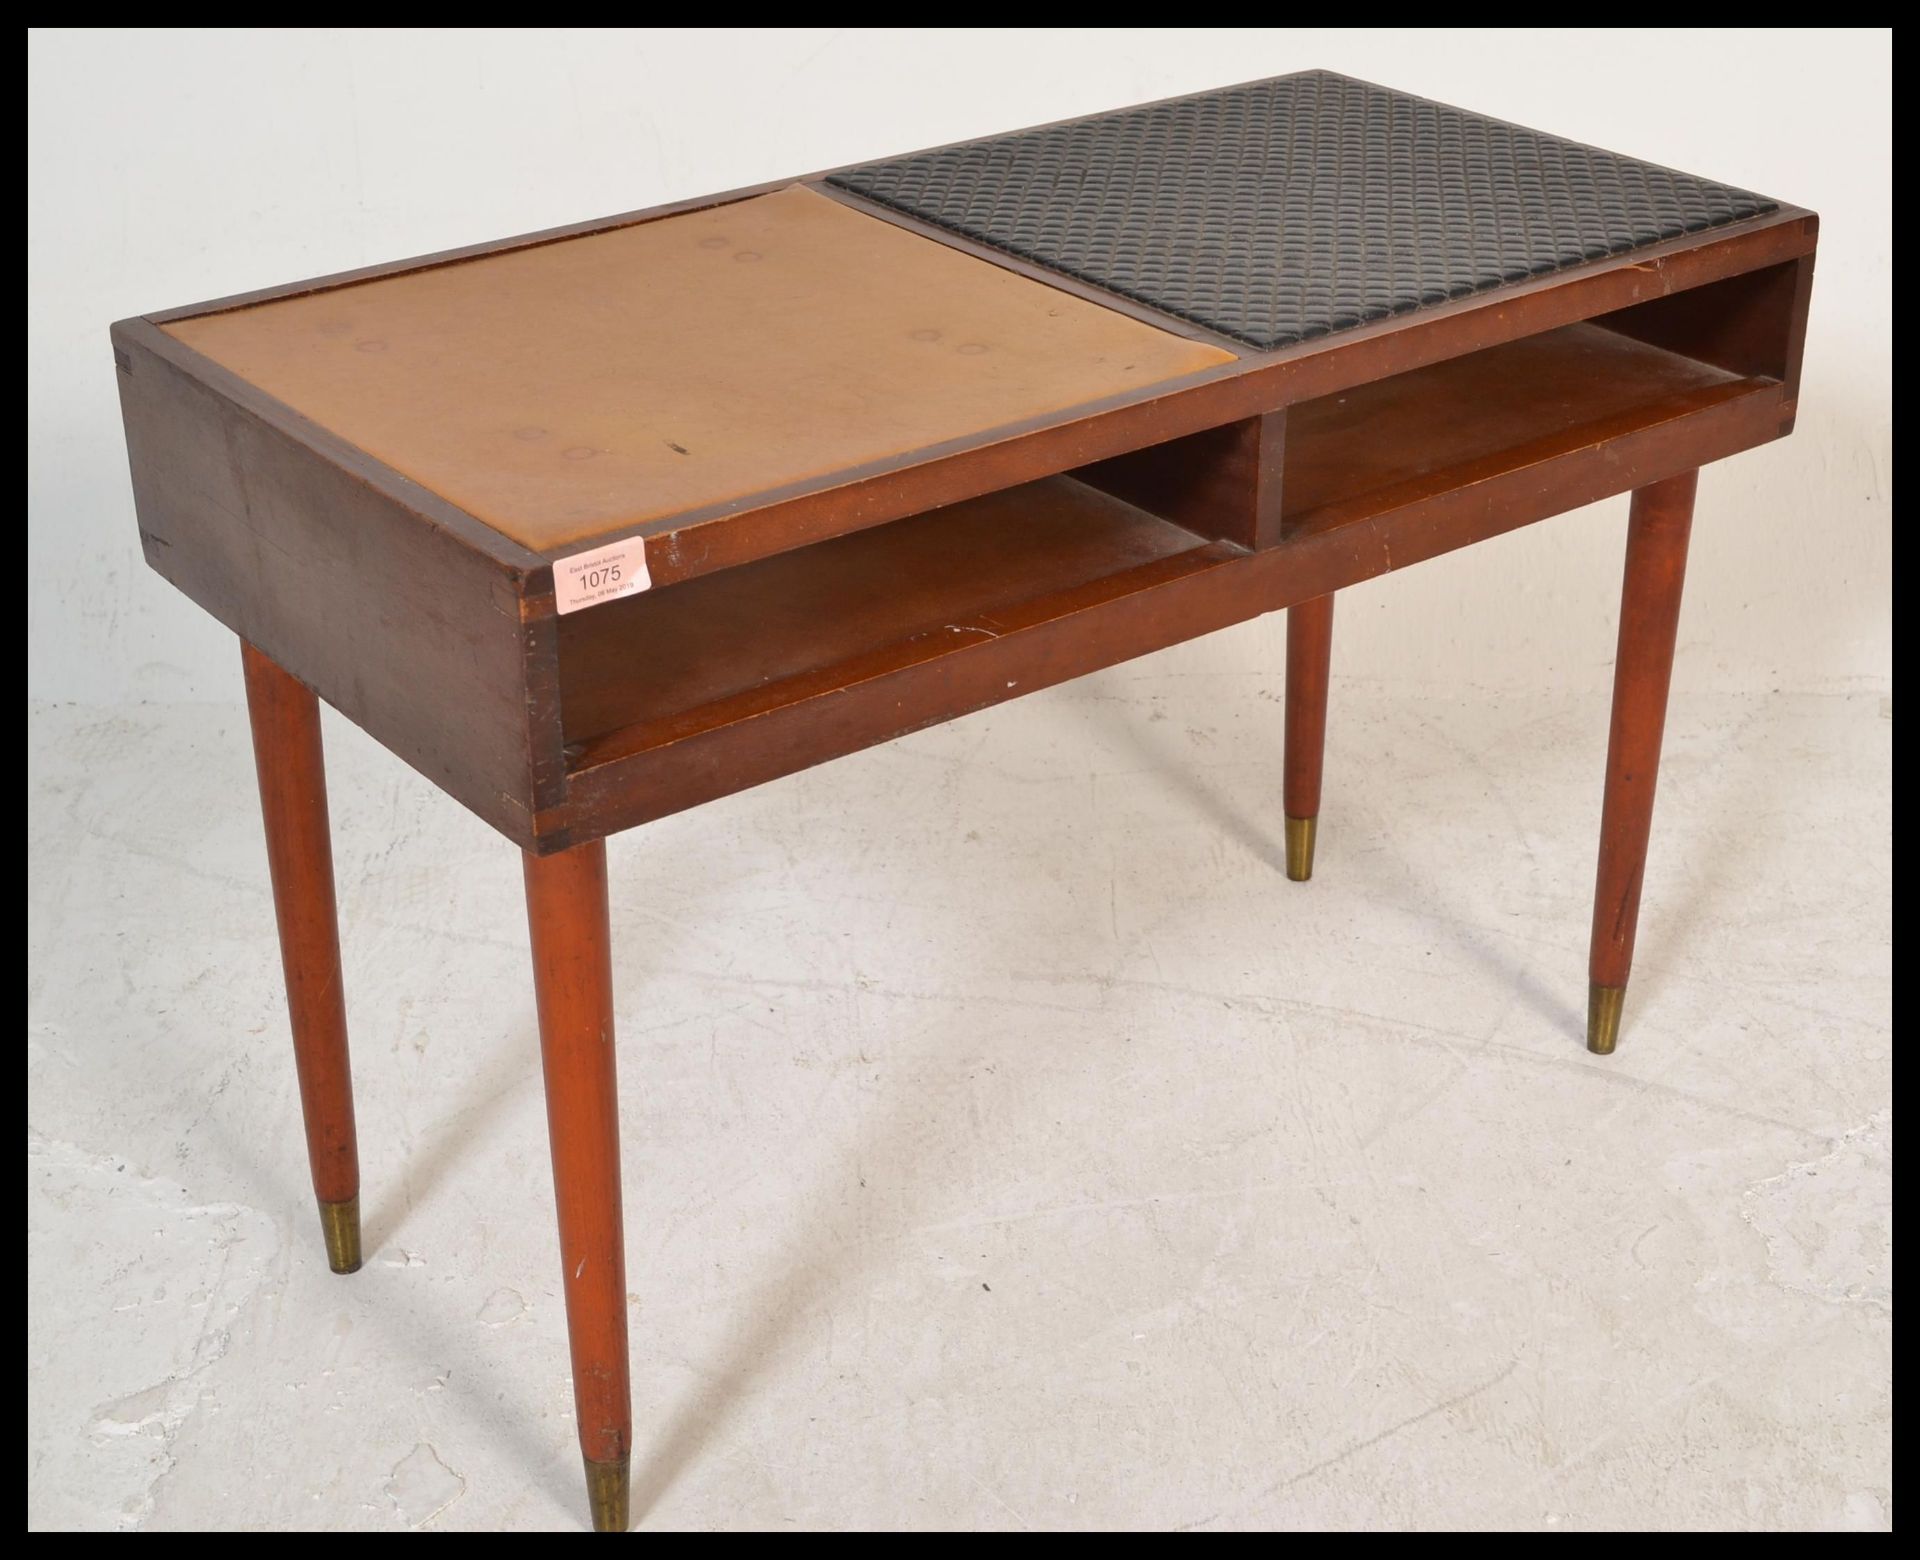 A vintage retro 20th Century teak wood telephone table raised on tapering legs with brass feet.